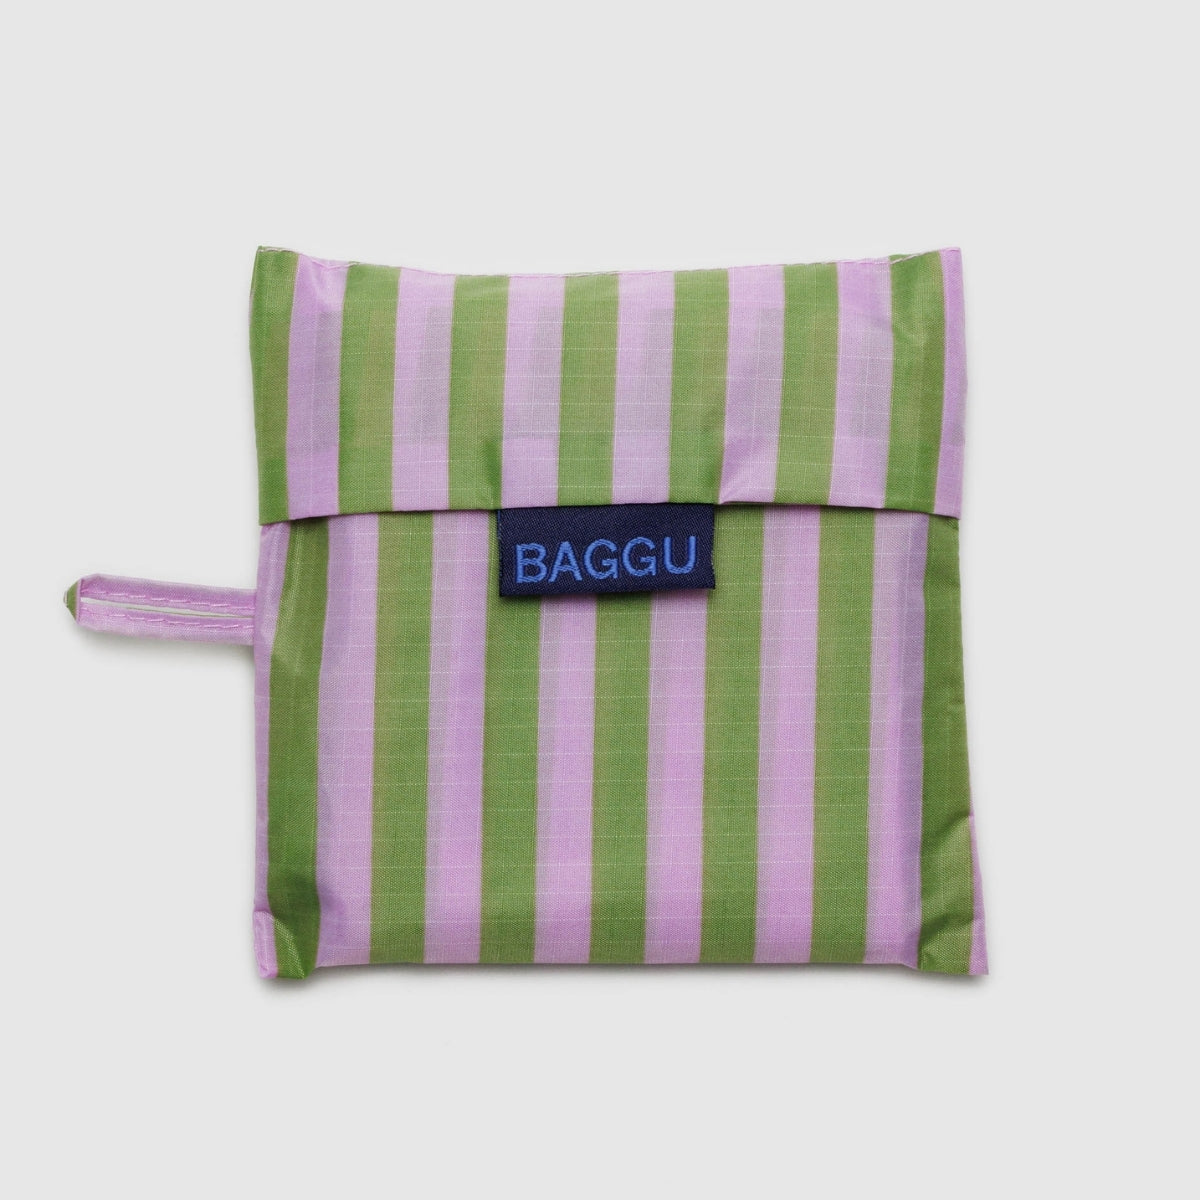 Baggu Standard Bag in Avocado Candy Stripe